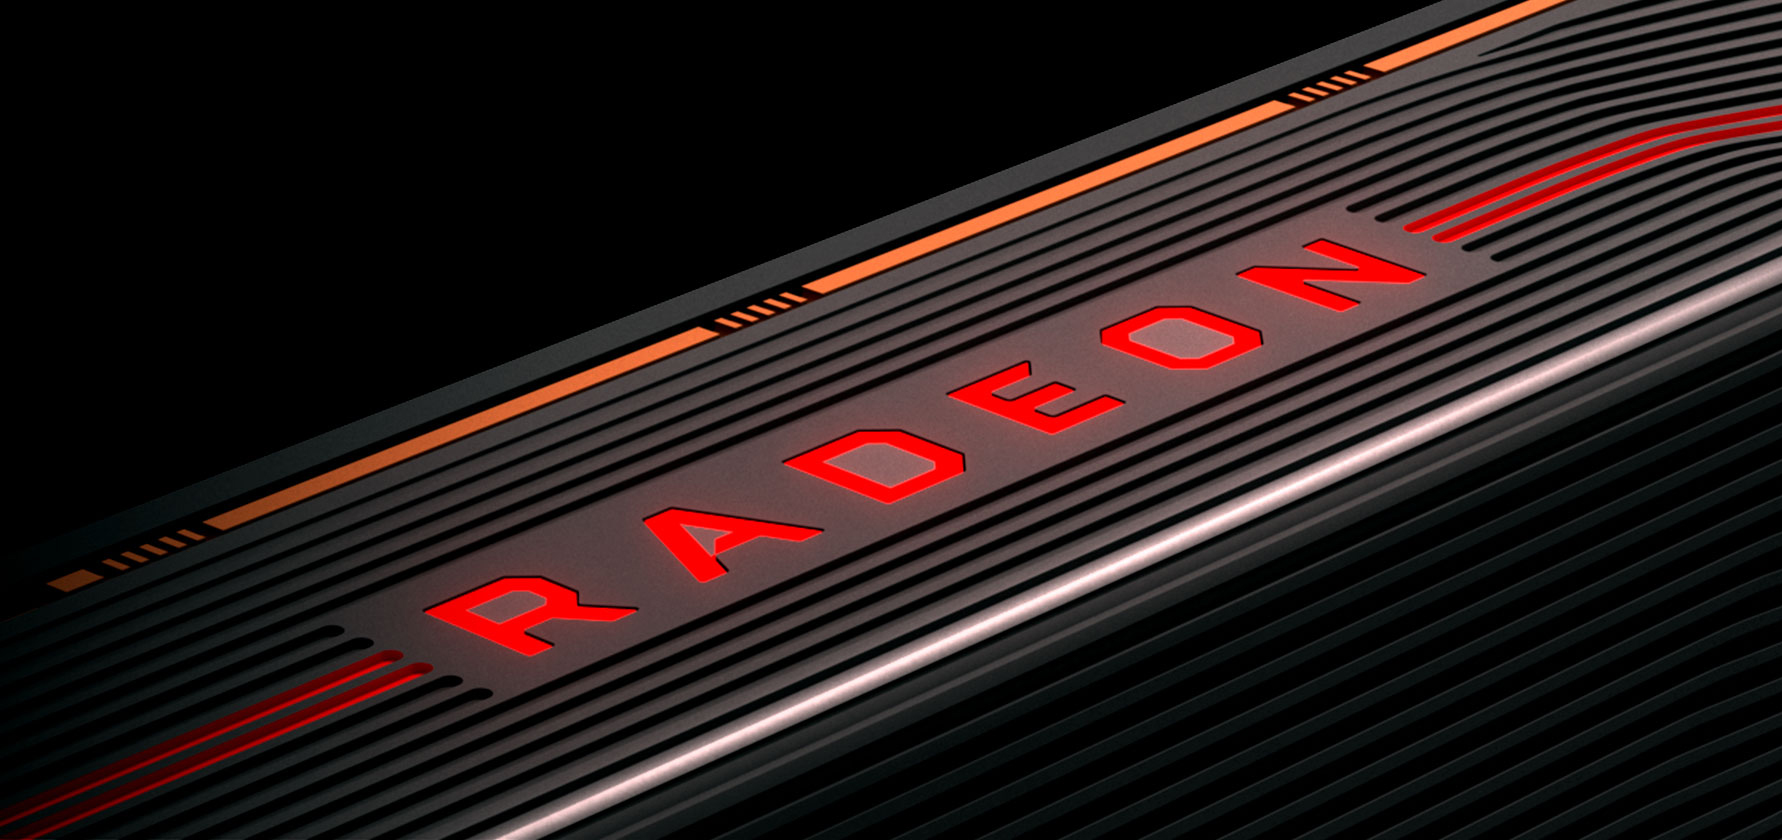 Radeon Rx 5700 Xt 8g Key Features Graficke Karty Gigabyte Czech Republic